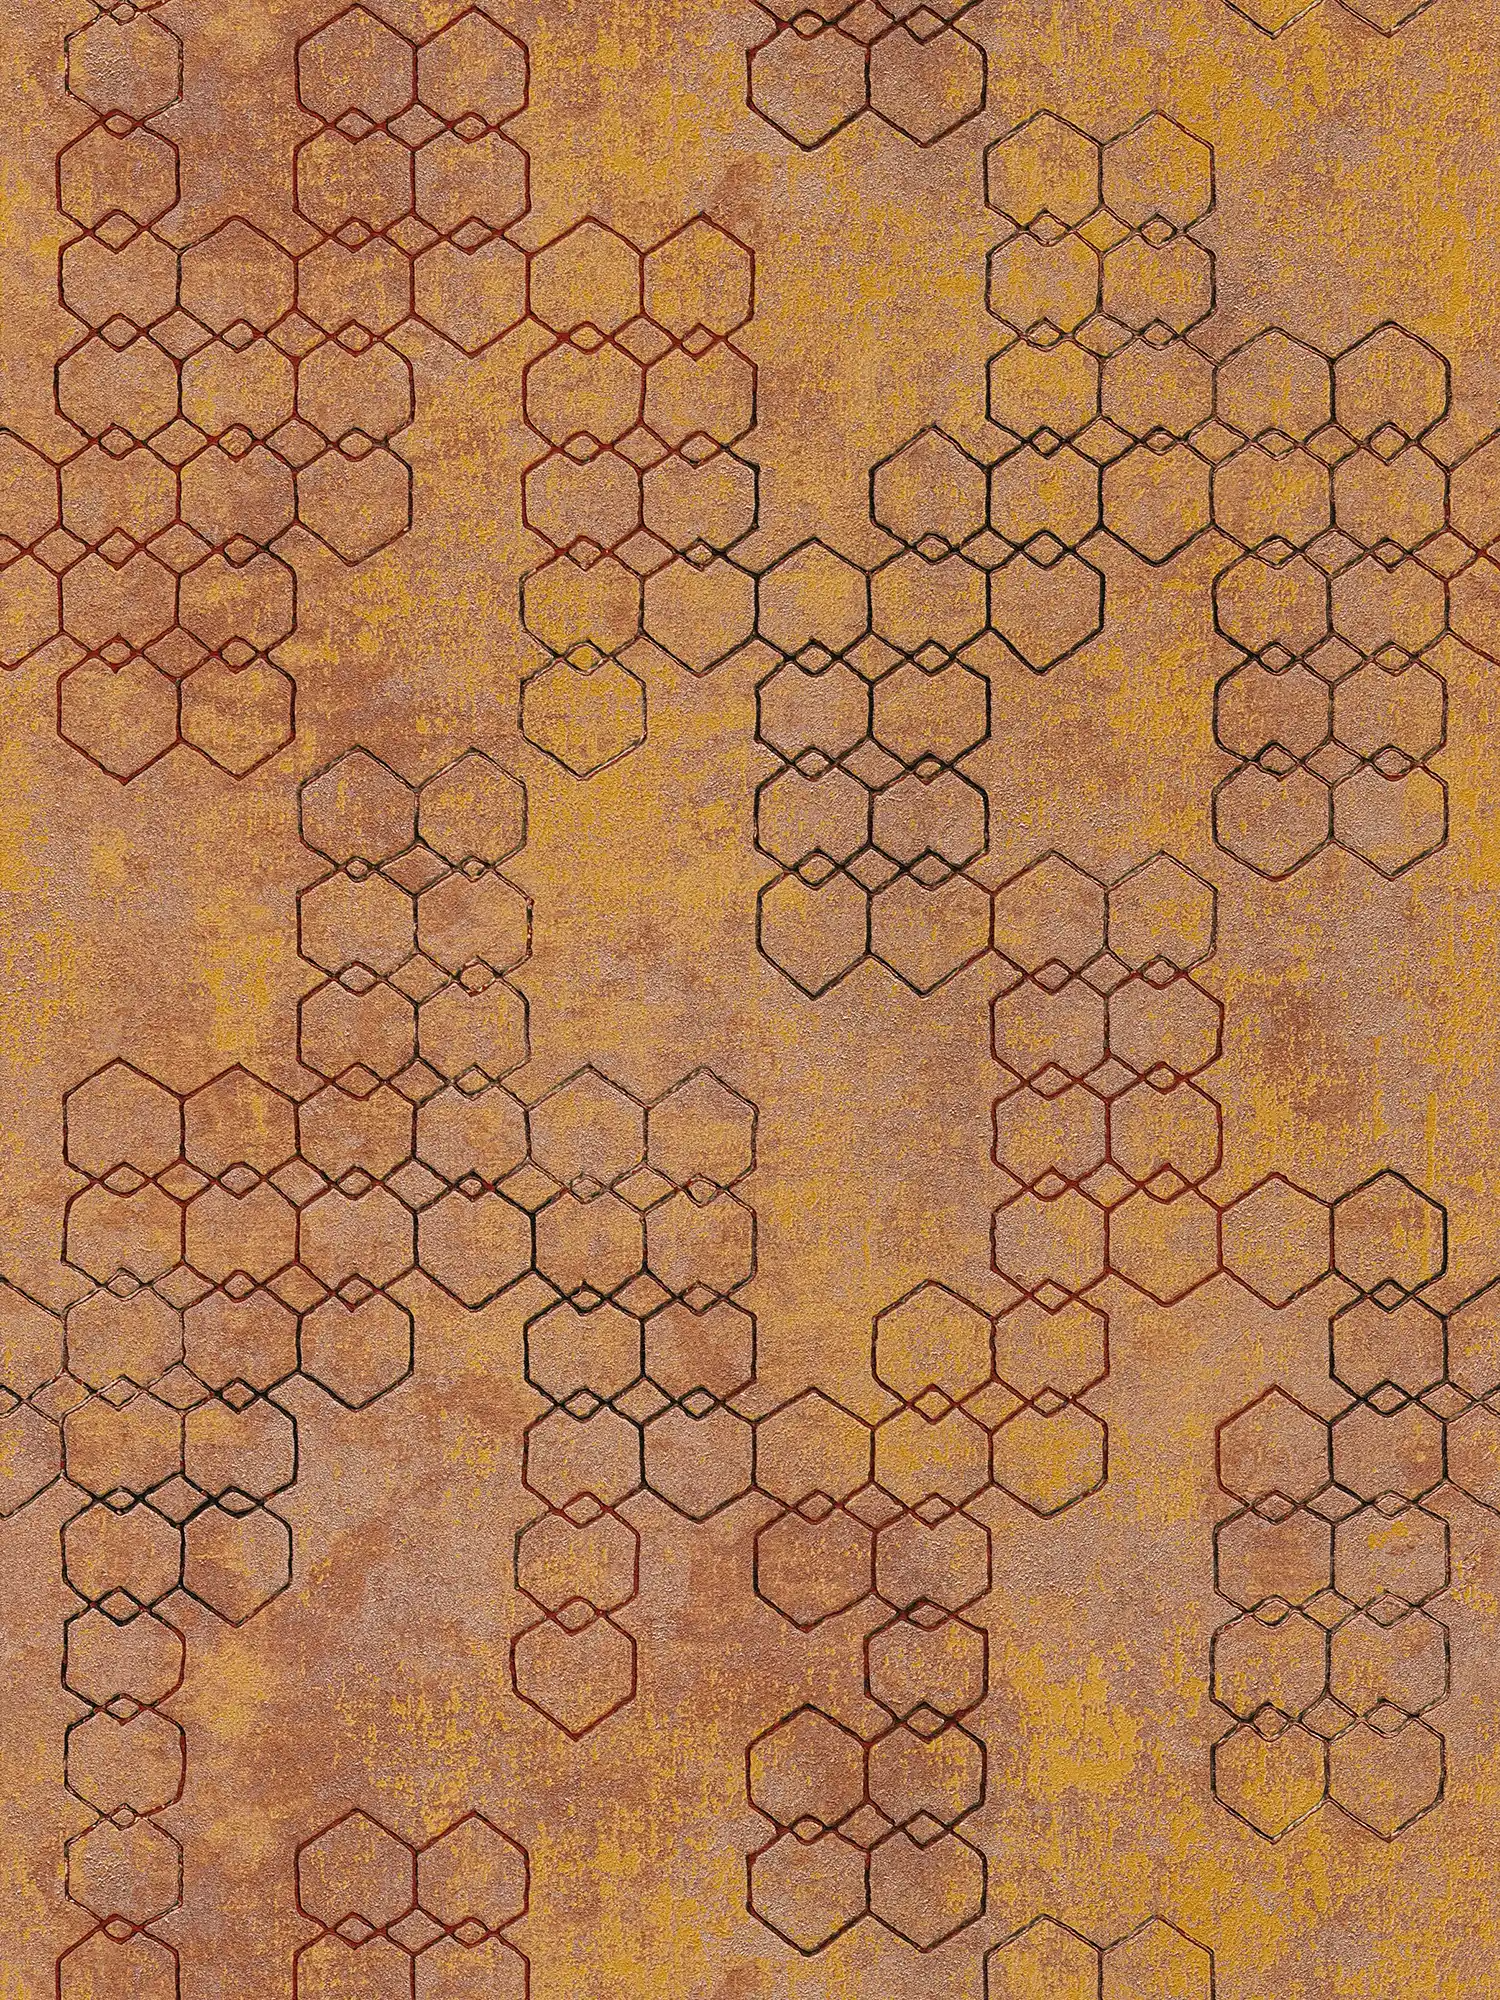 Geometric pattern wallpaper in industrial style - orange, gold, brown
